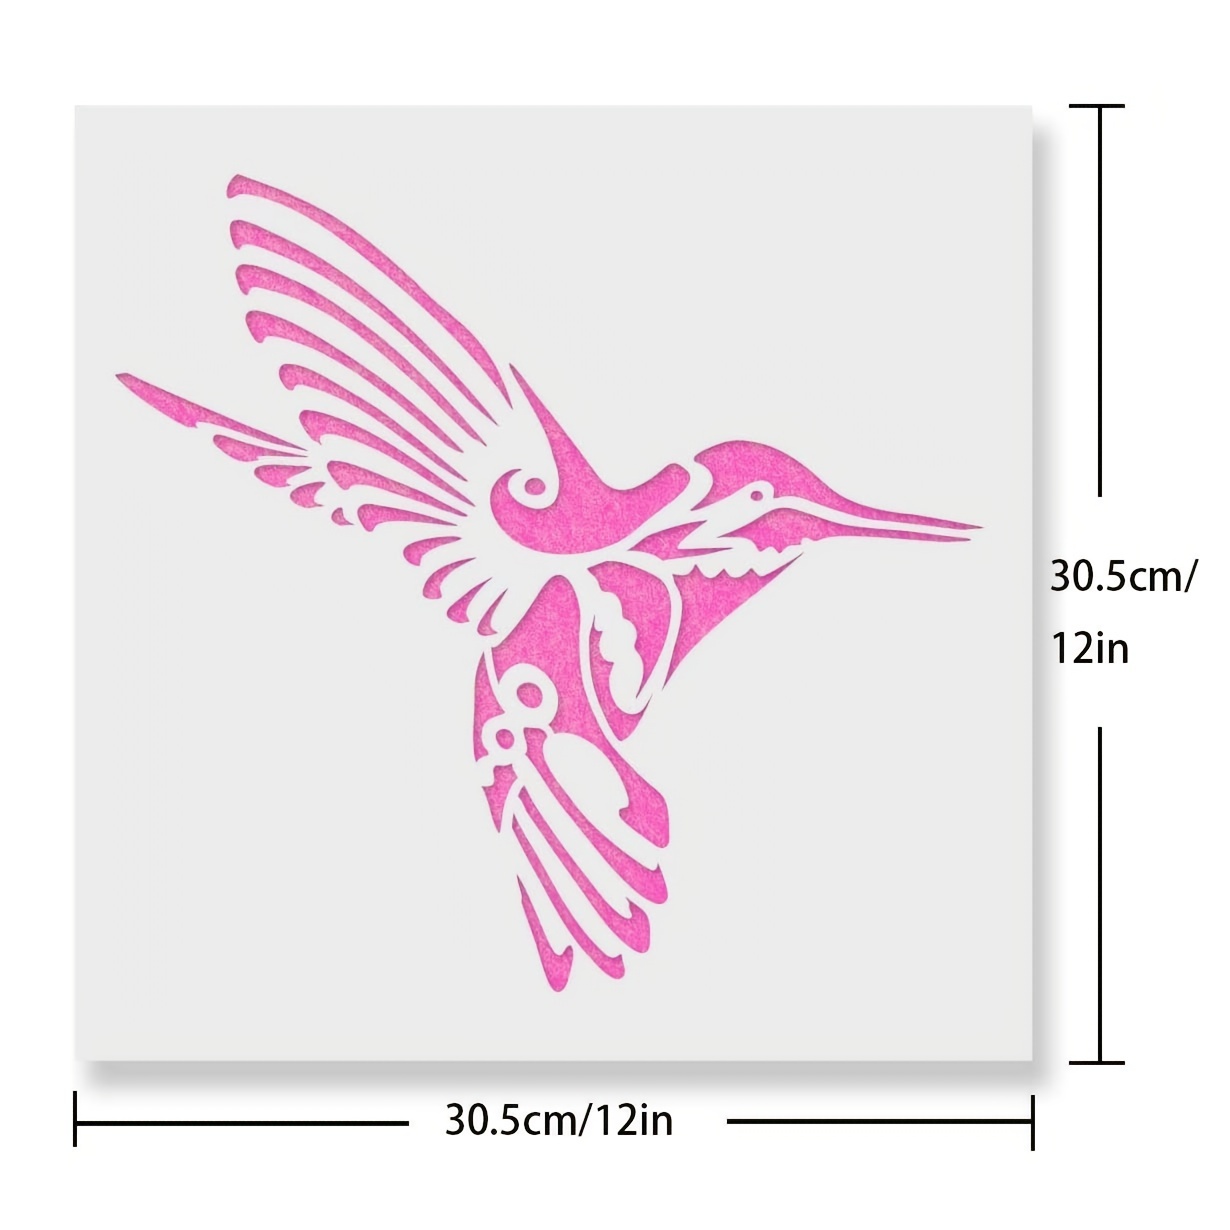 Plantilla / stencil a4 - colibrí